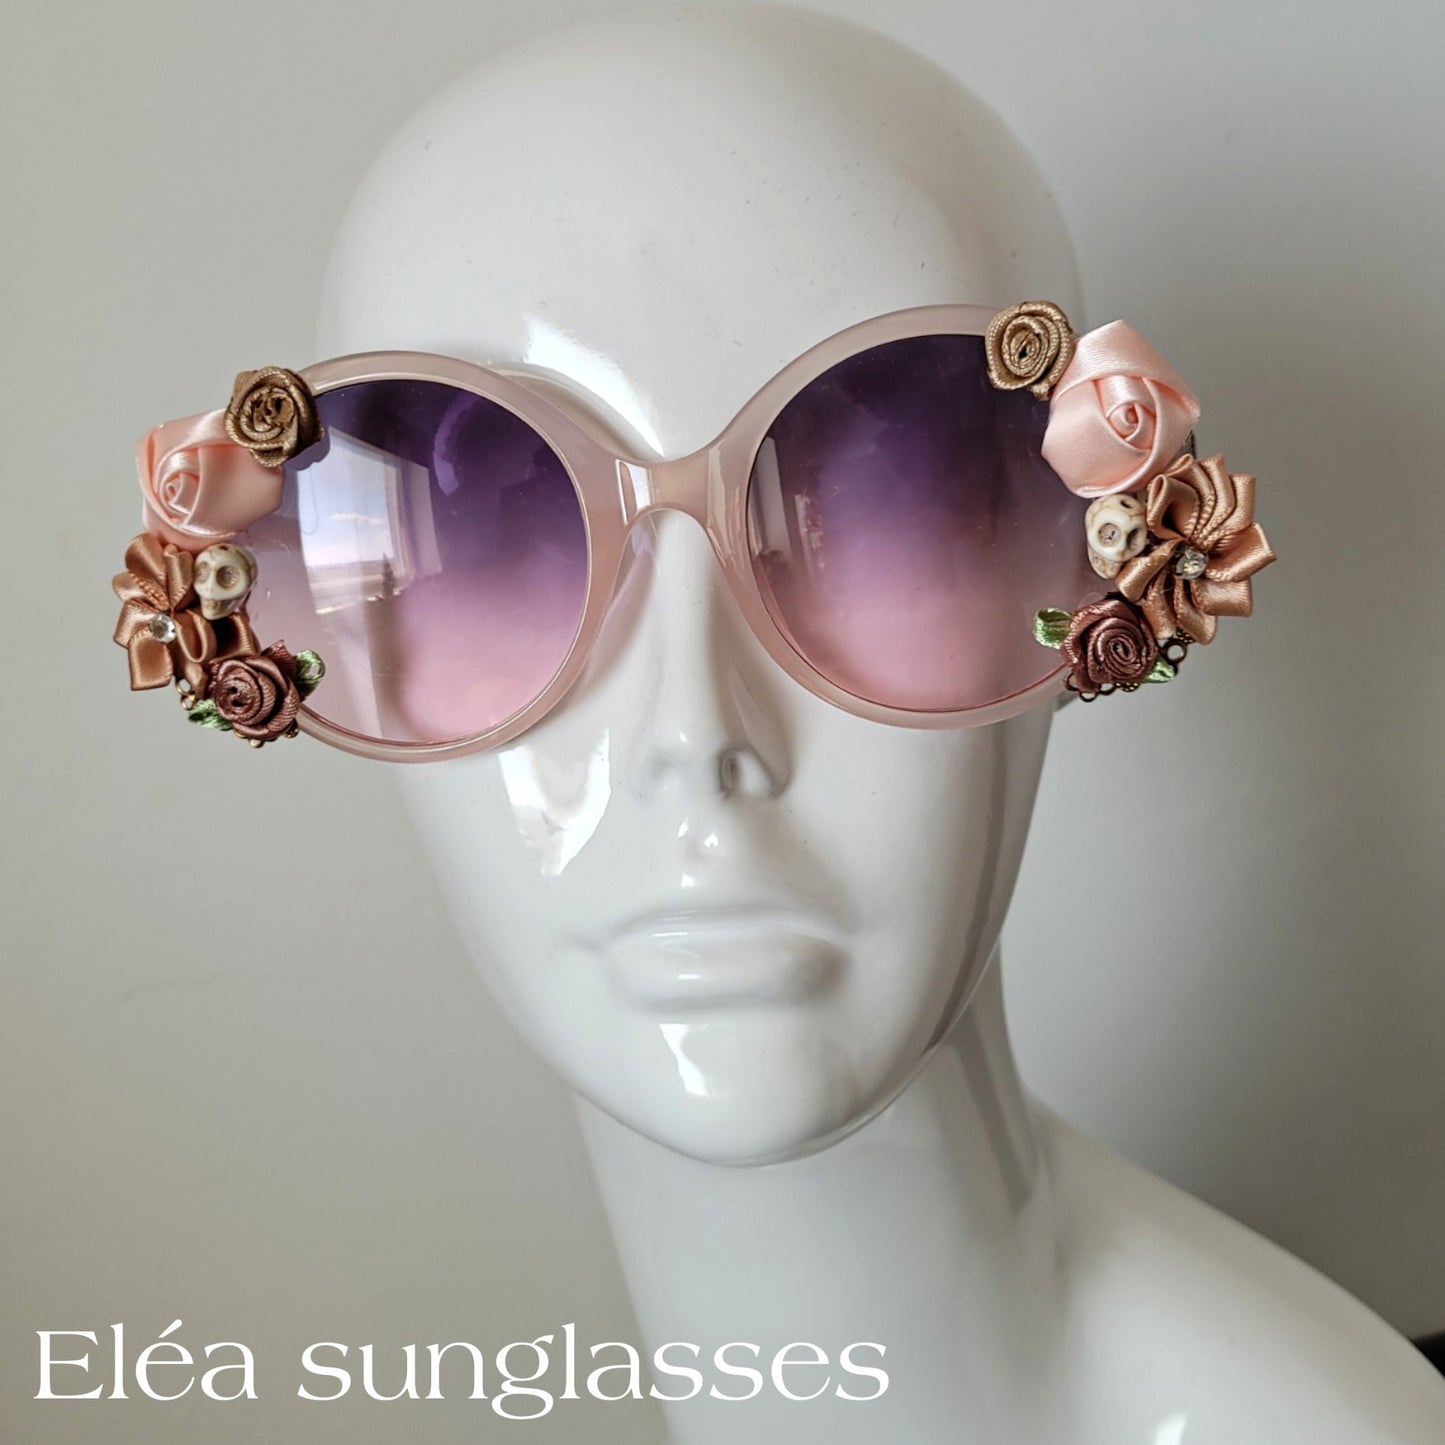 Á vallians coeurs riens impossible Collection: The Eléa sunglasses